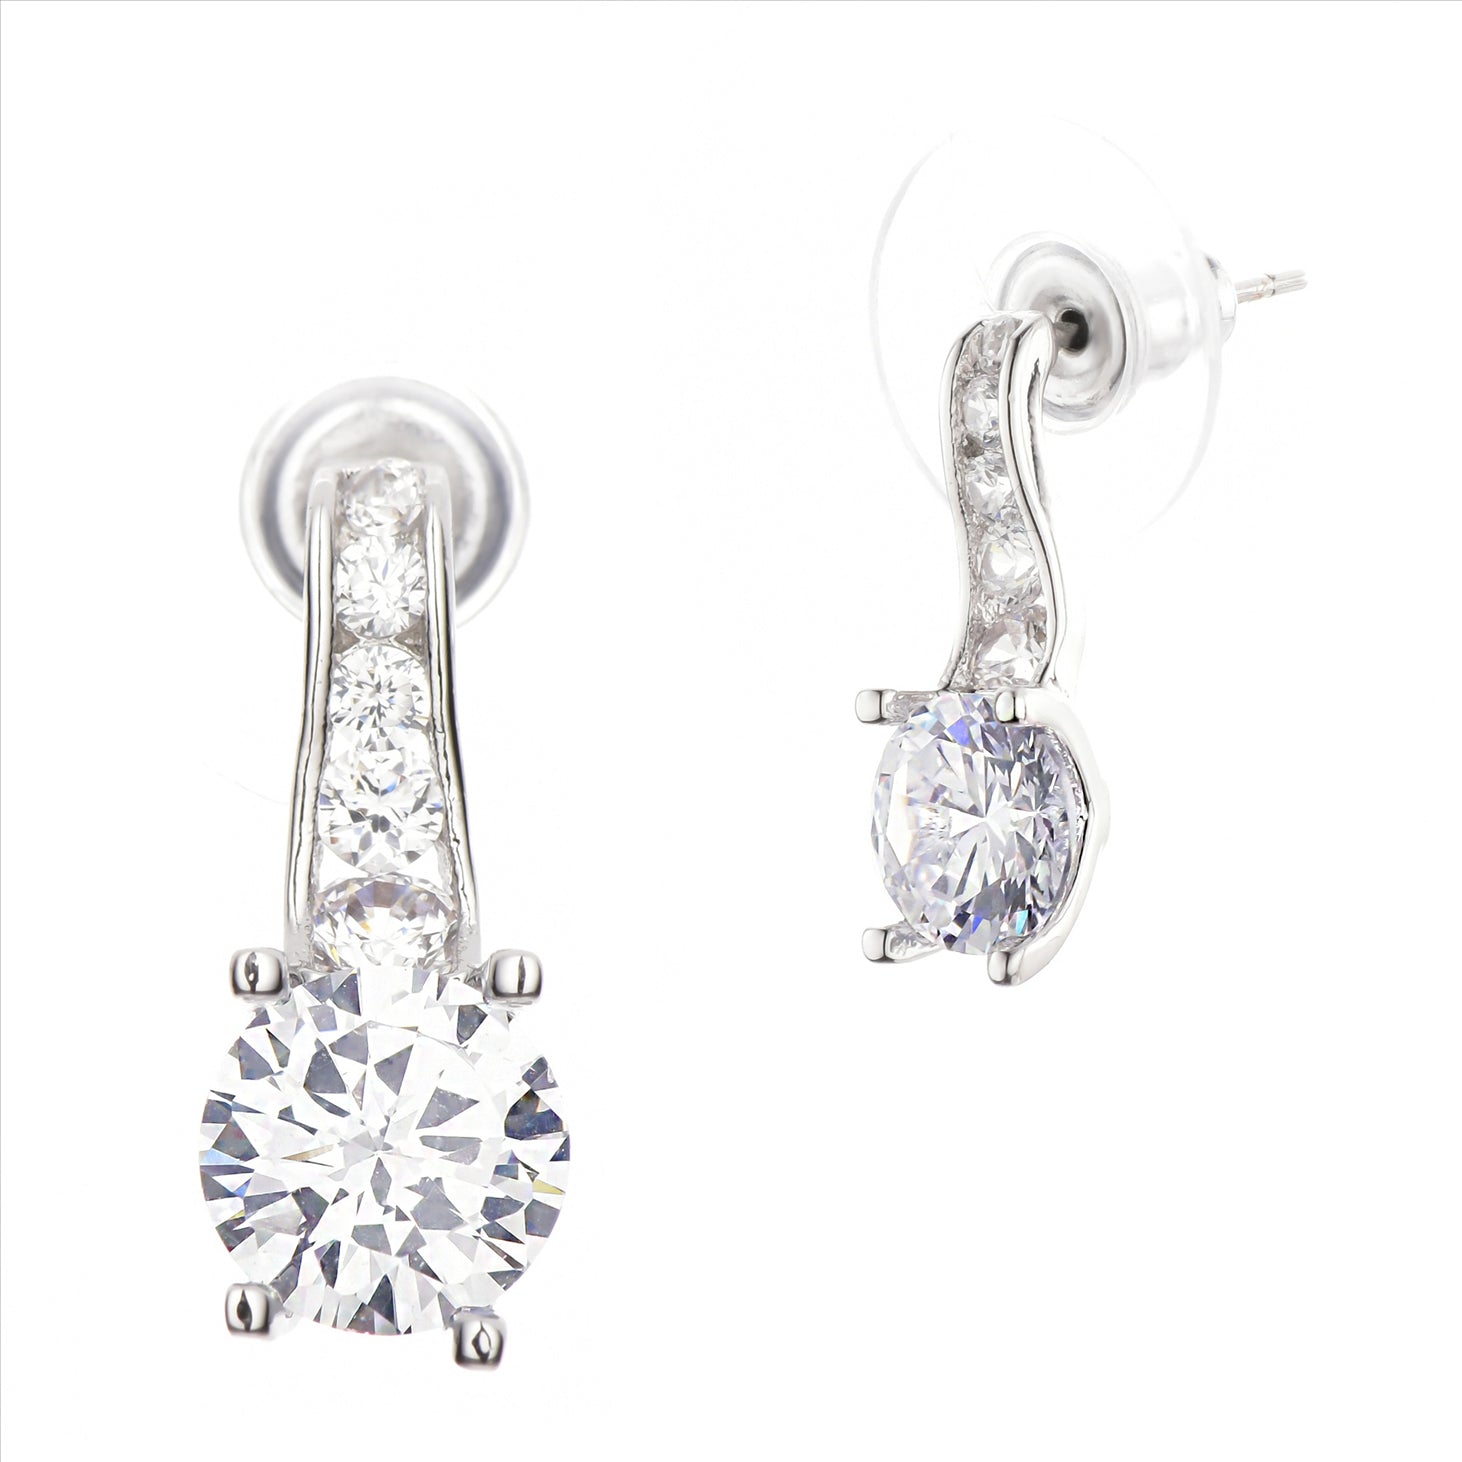 Buyless Fashion Women And Girls Wedding Dangle Earrings White Stones CZ Gift Box